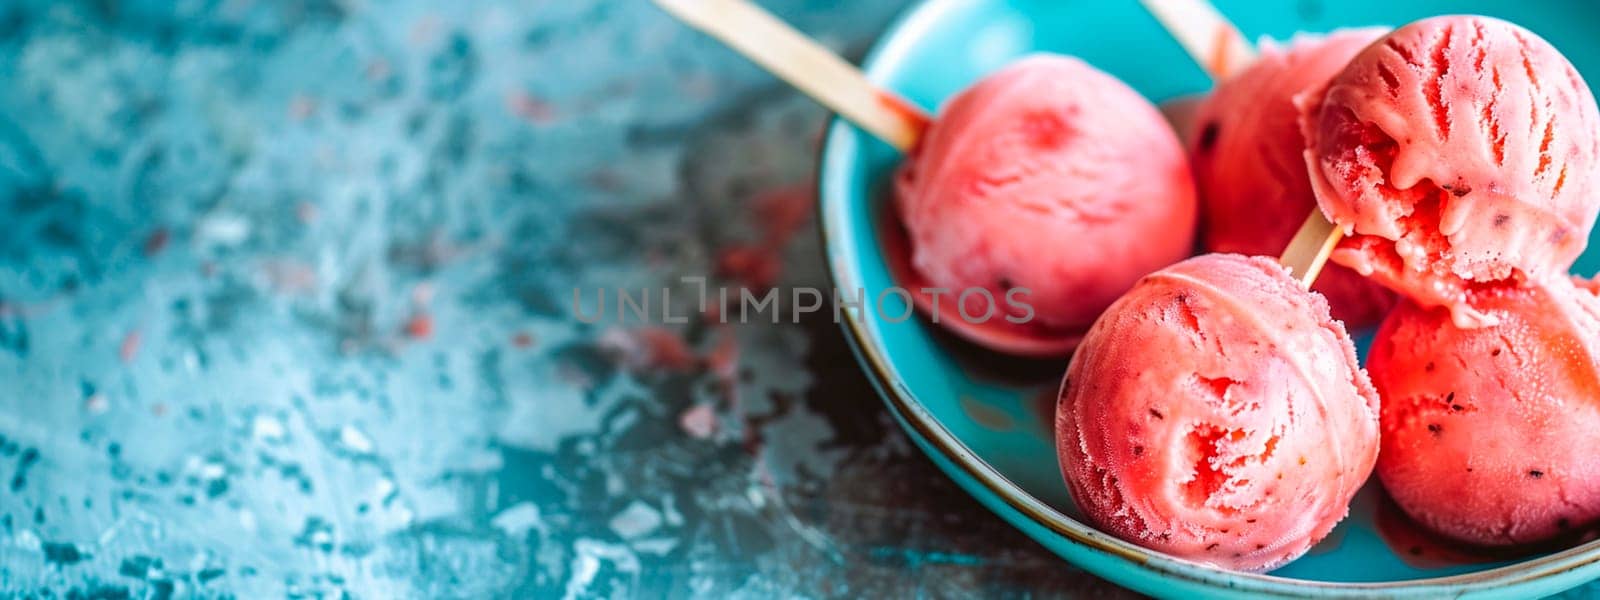 watermelon ice cream on the table. selective focus. fruit.